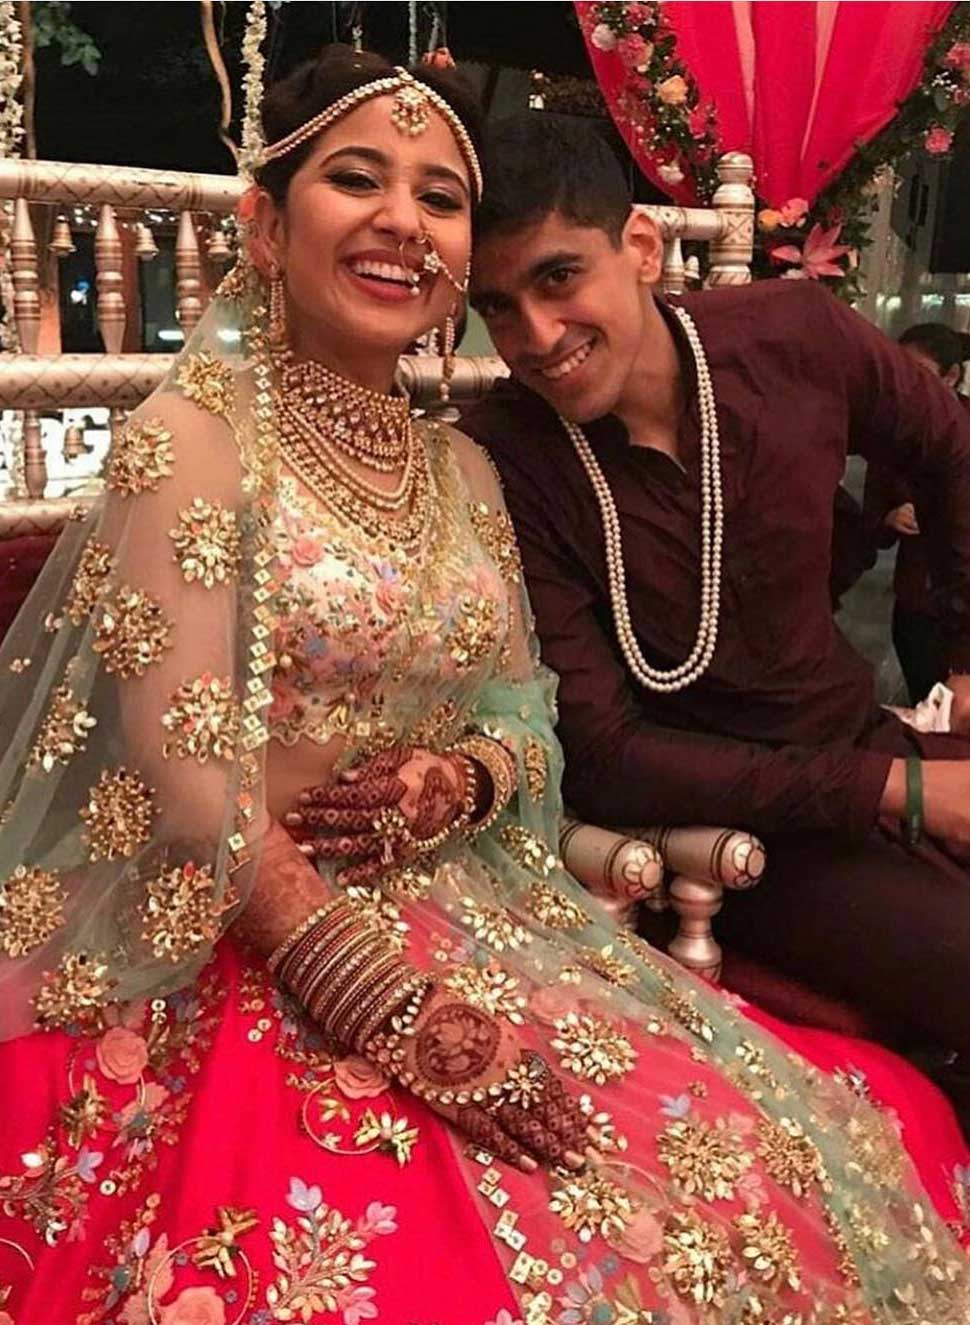 Shweta Tripathi tied the knot with rapper boyfriend Chaitnya Sharma